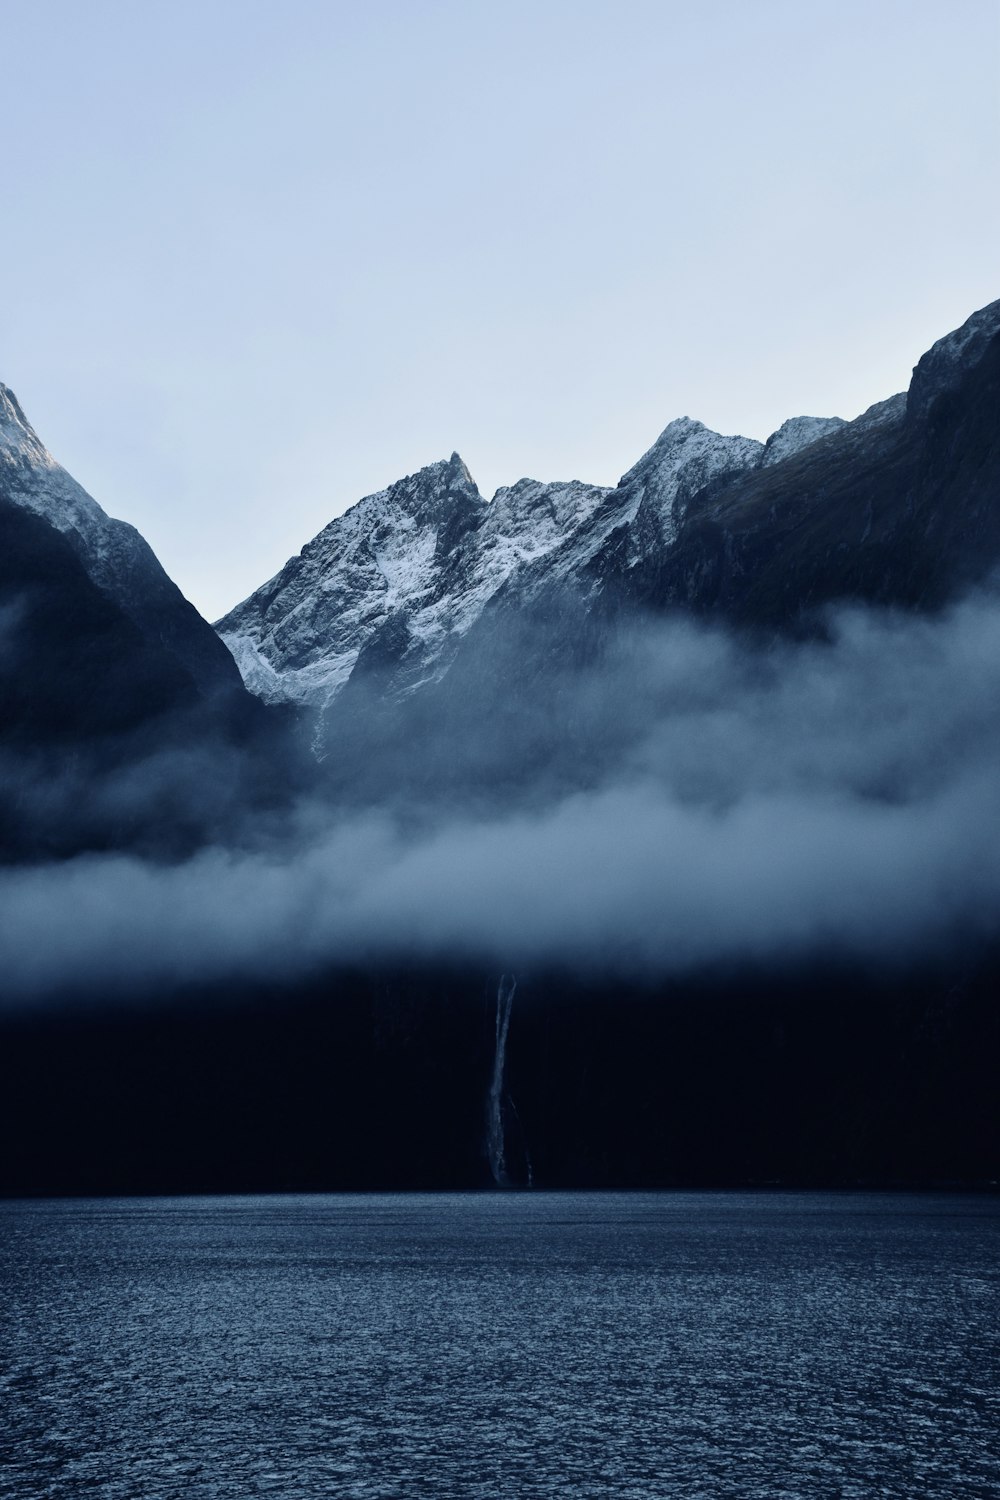 Montanha preta e branca perto do corpo de água